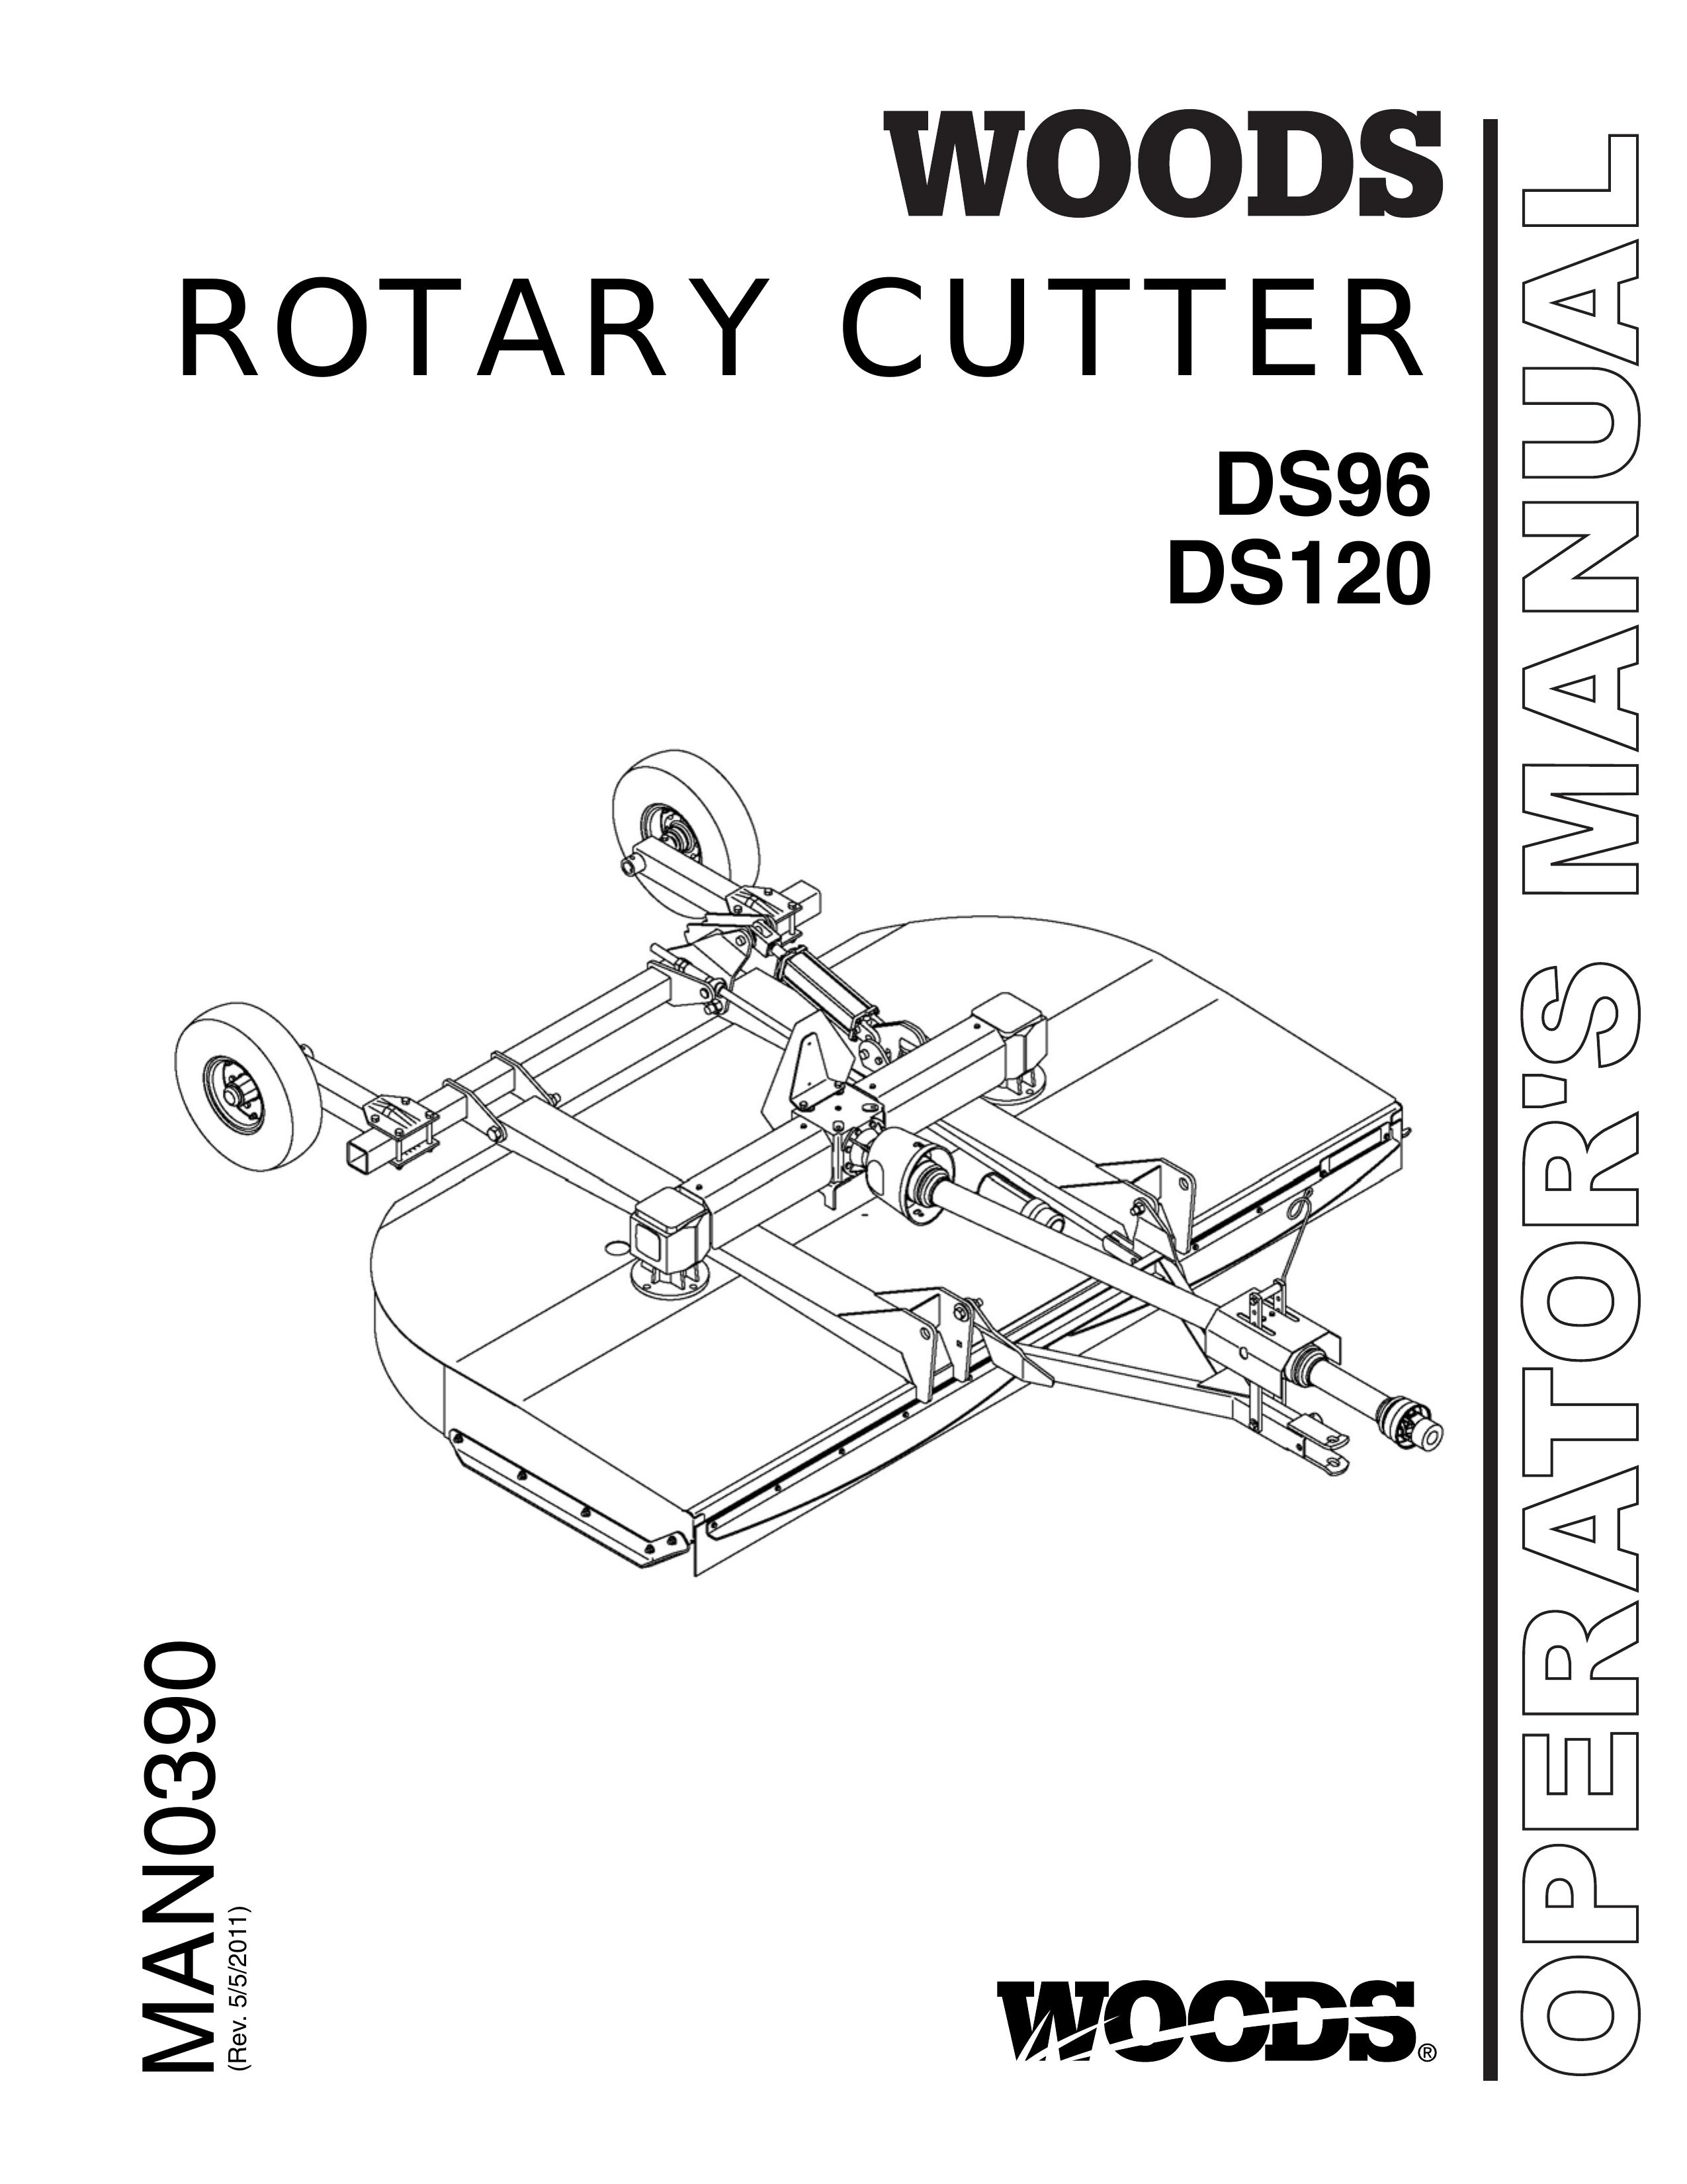 Woods Equipment DS120 Brush Cutter User Manual